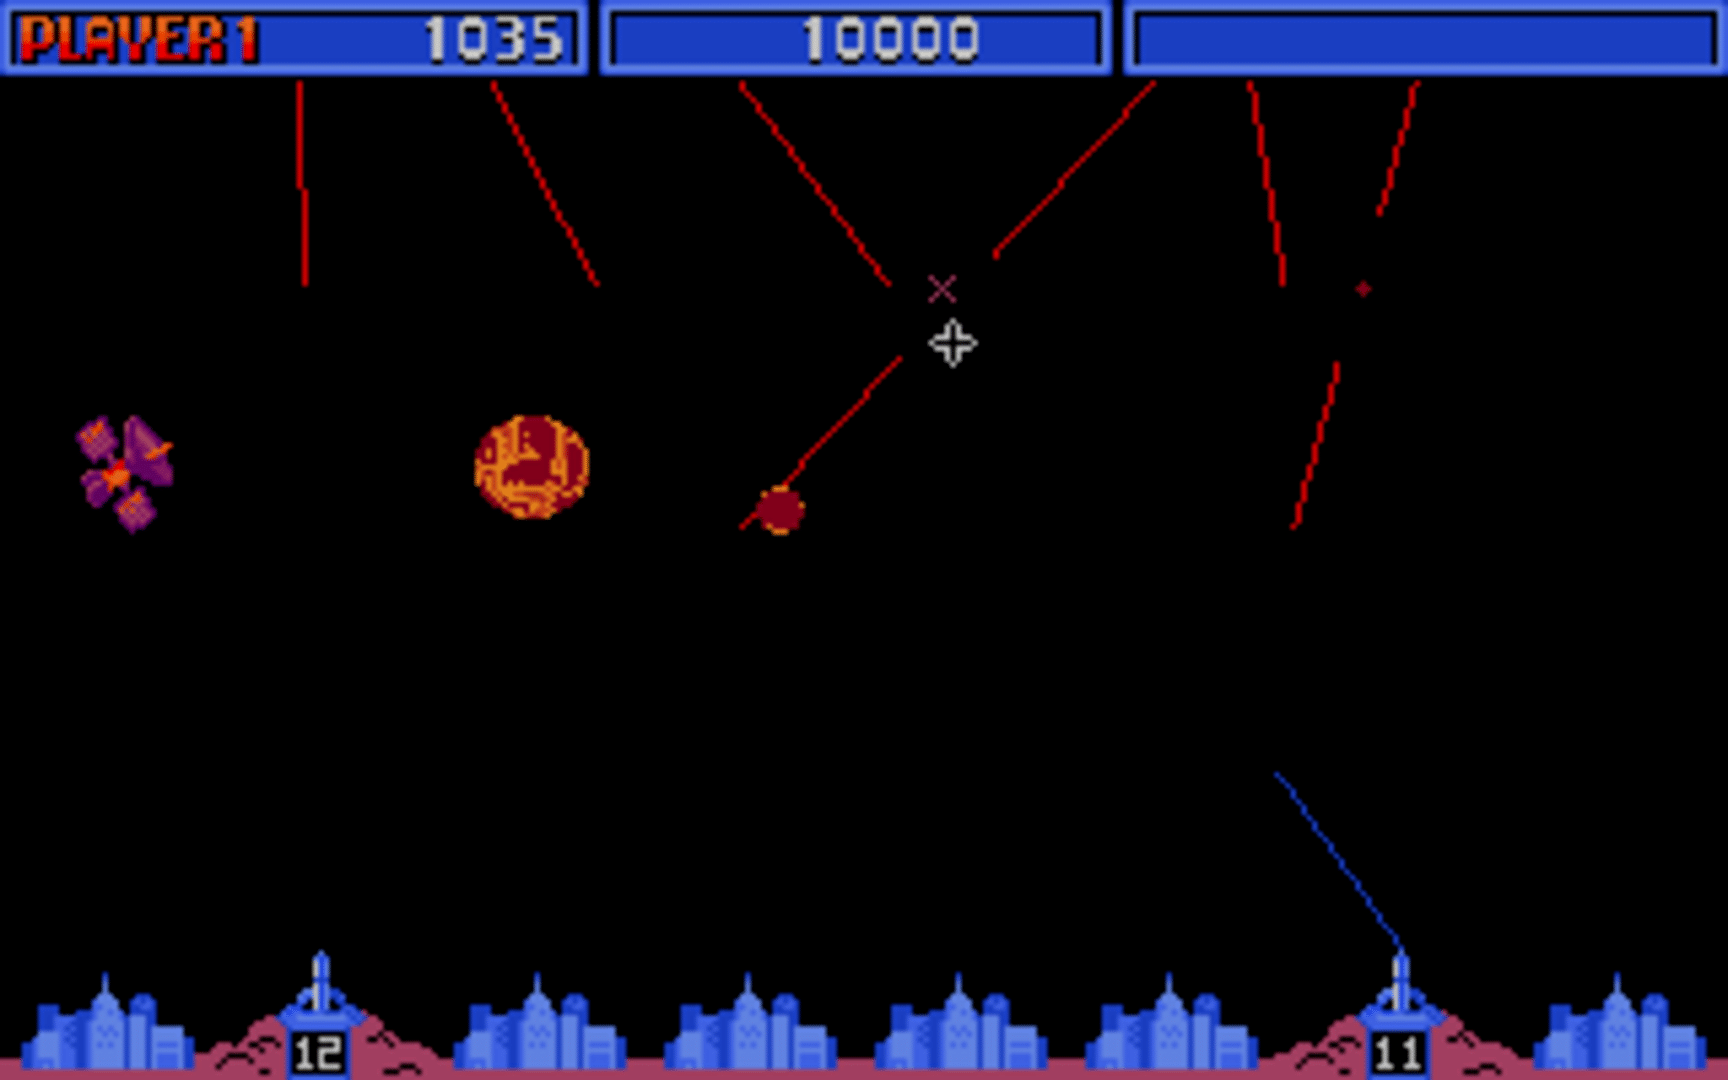 Missile Command screenshot